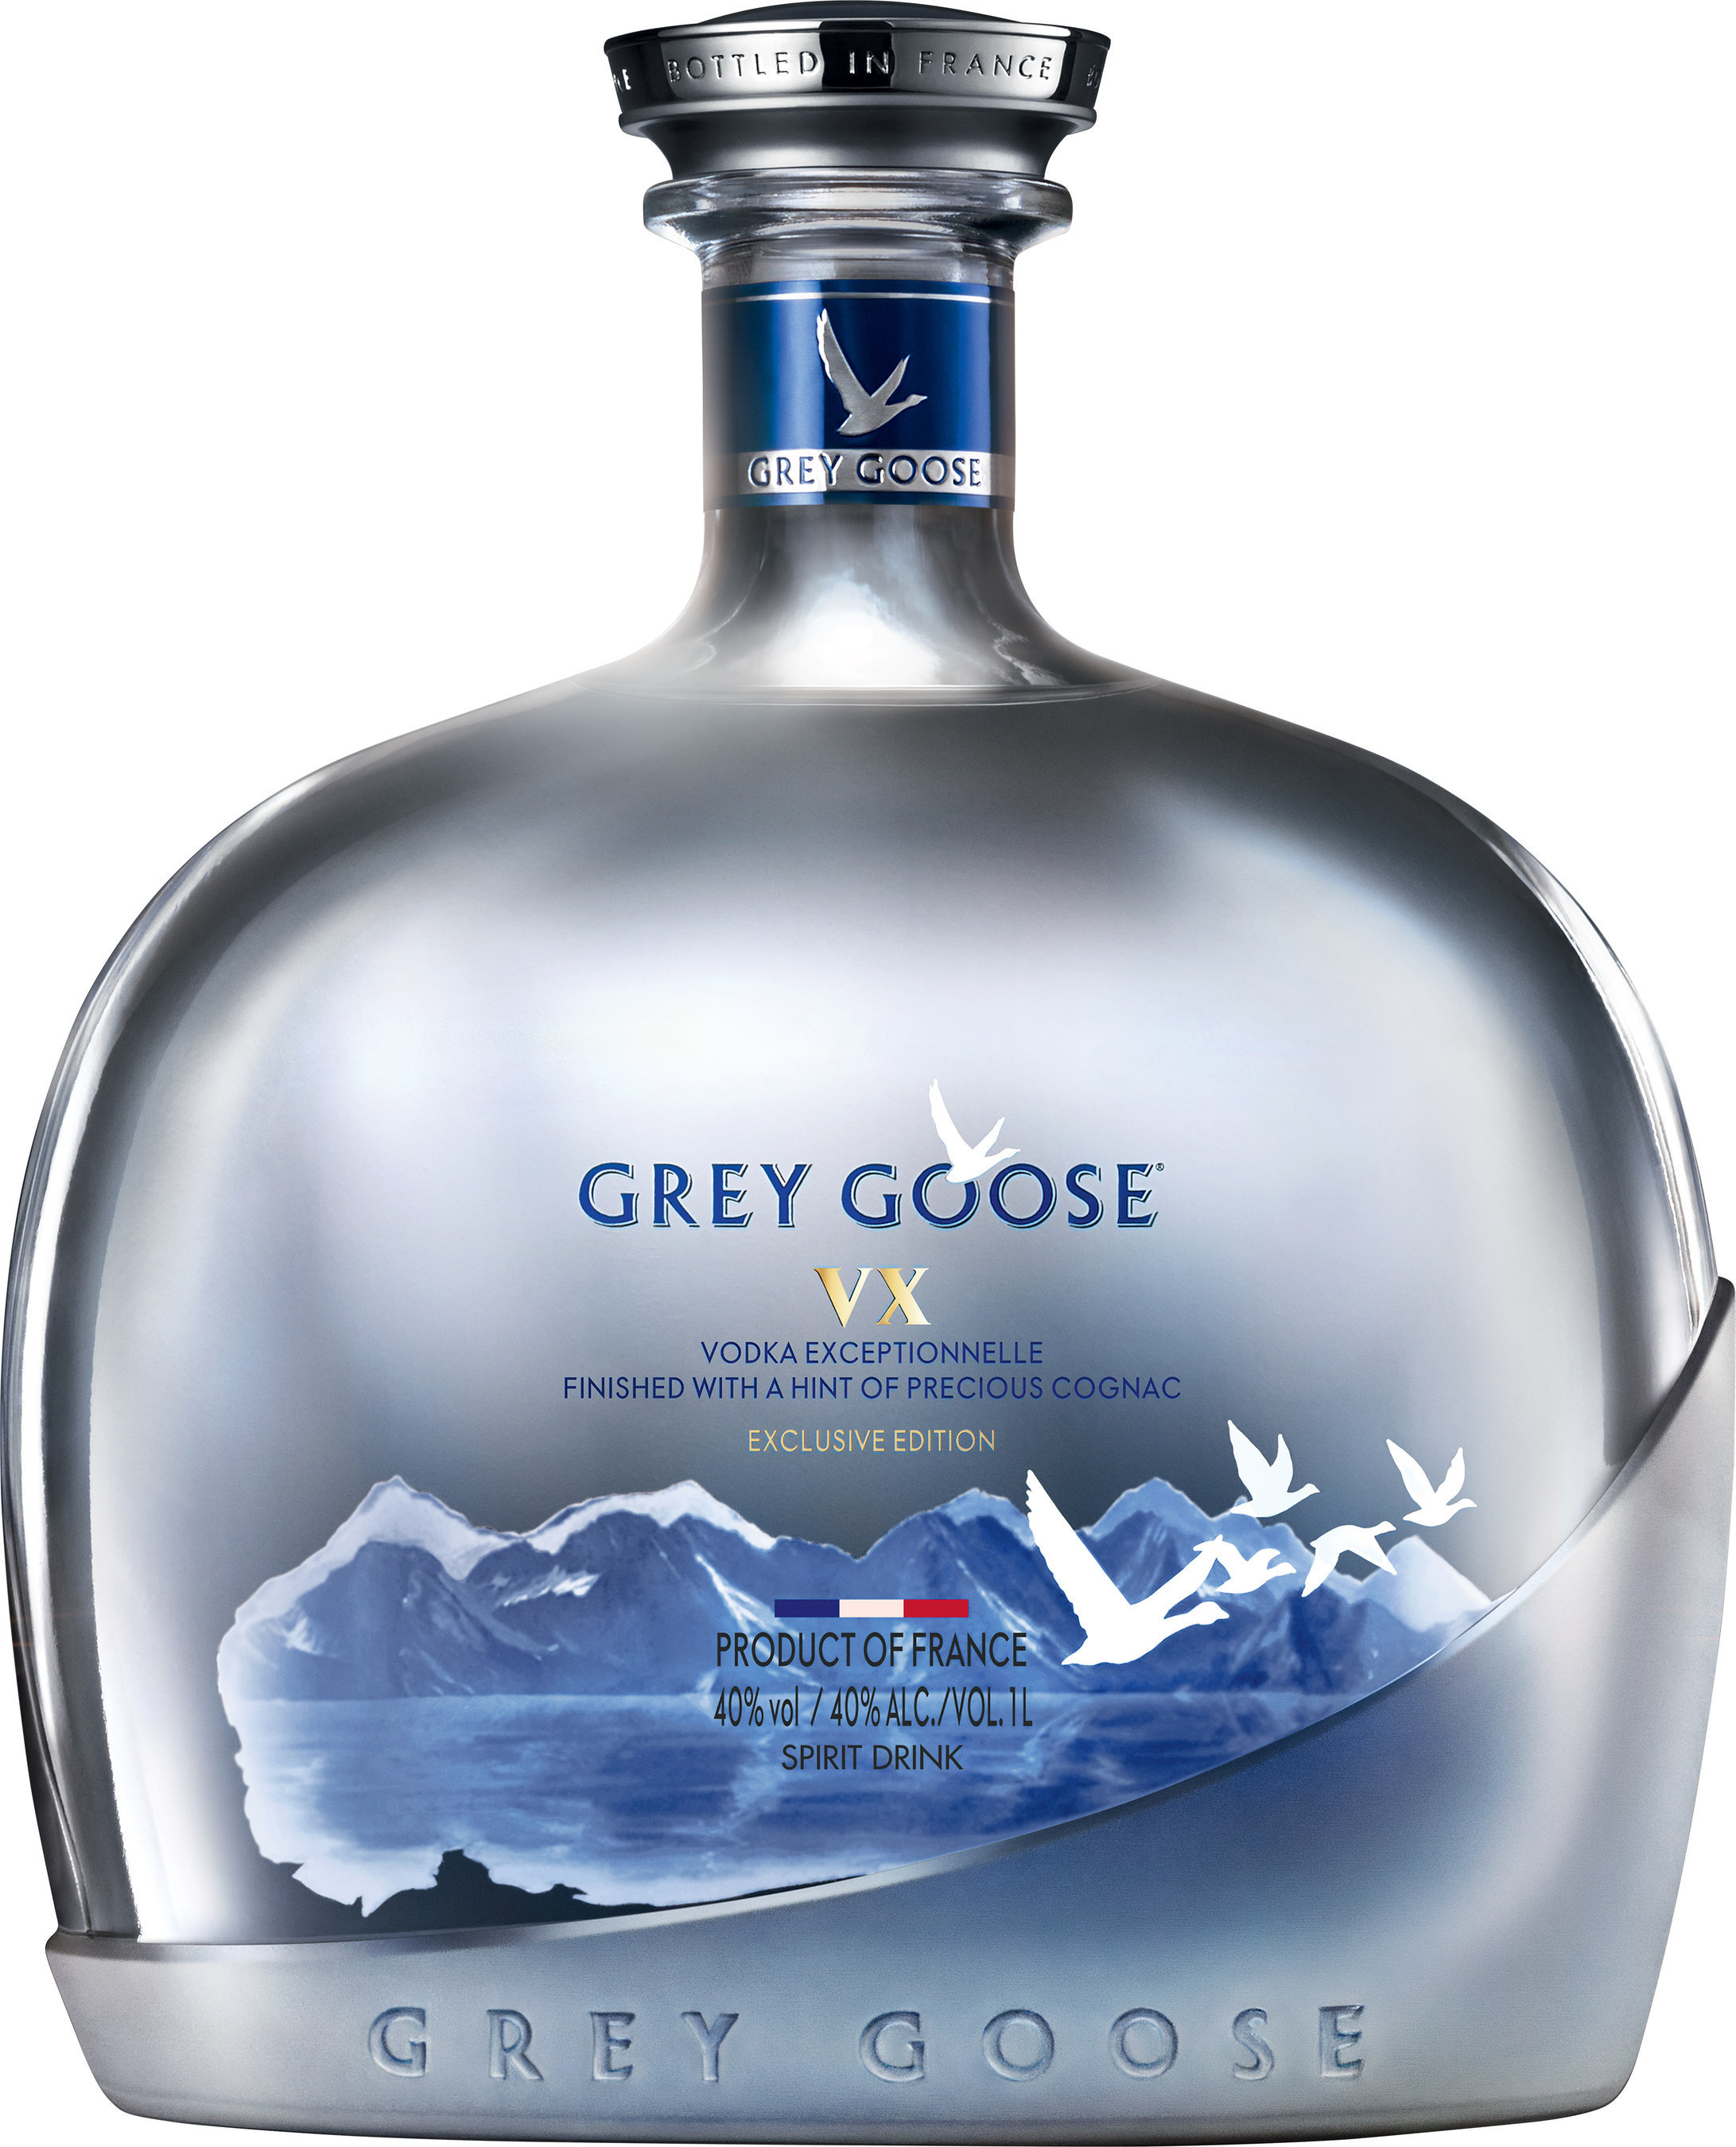 Introducing #TravelRetailExclusive Grey Goose VX- A marriage of the  original #GreyGoose with precious drops of #Cognac.